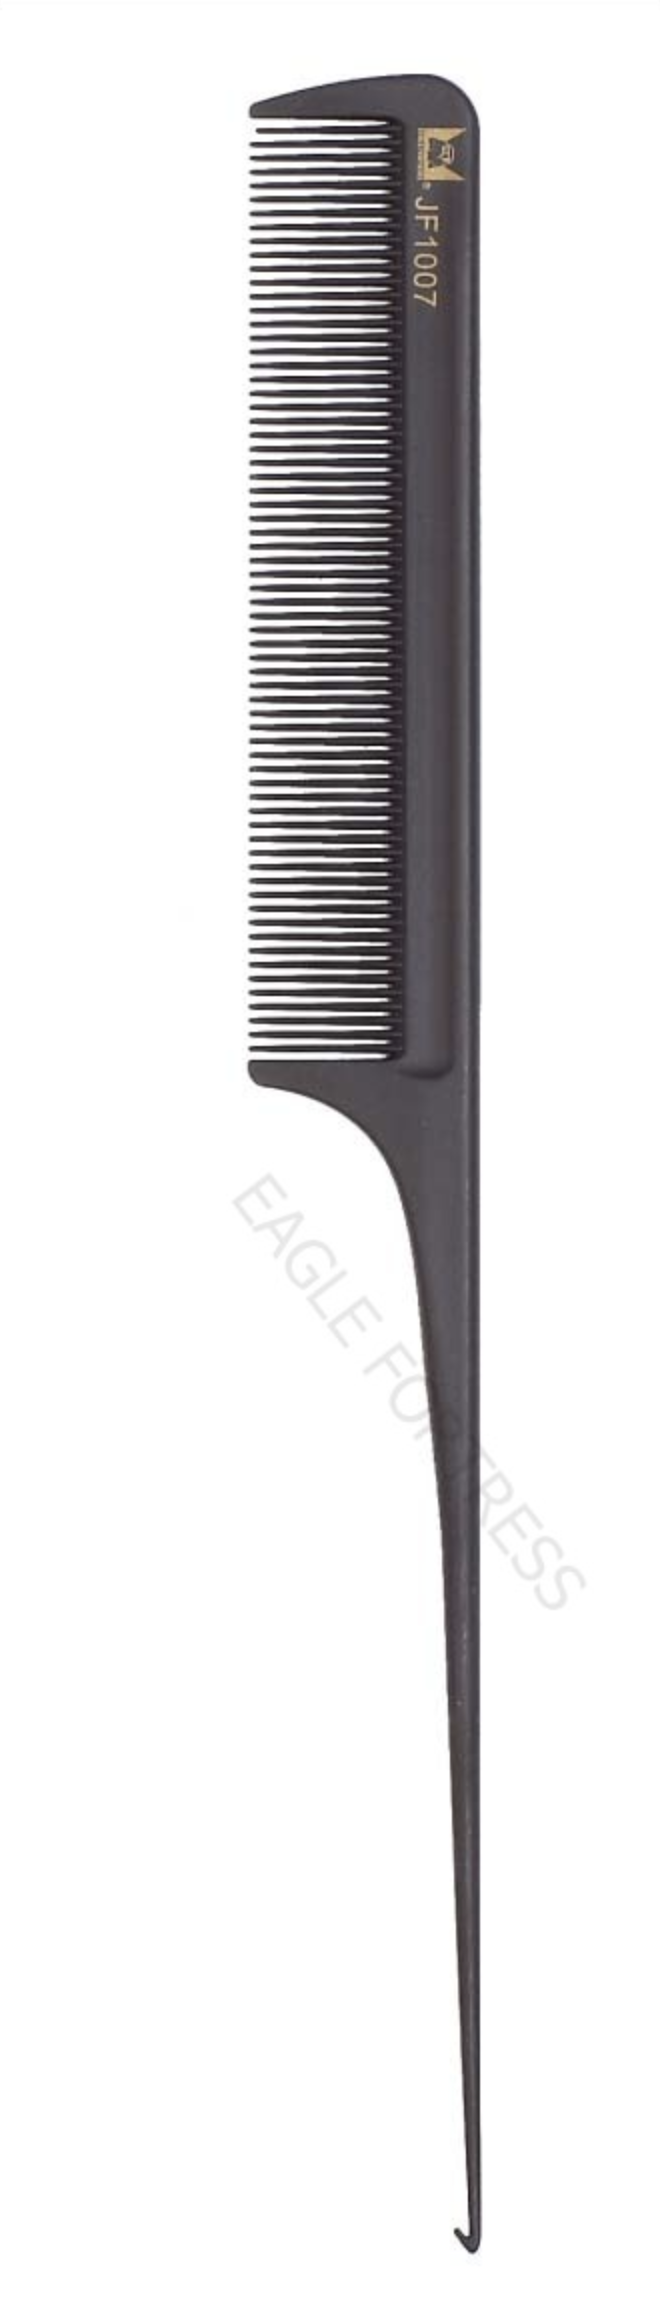 Eagle Fortress Silicone Tail comb